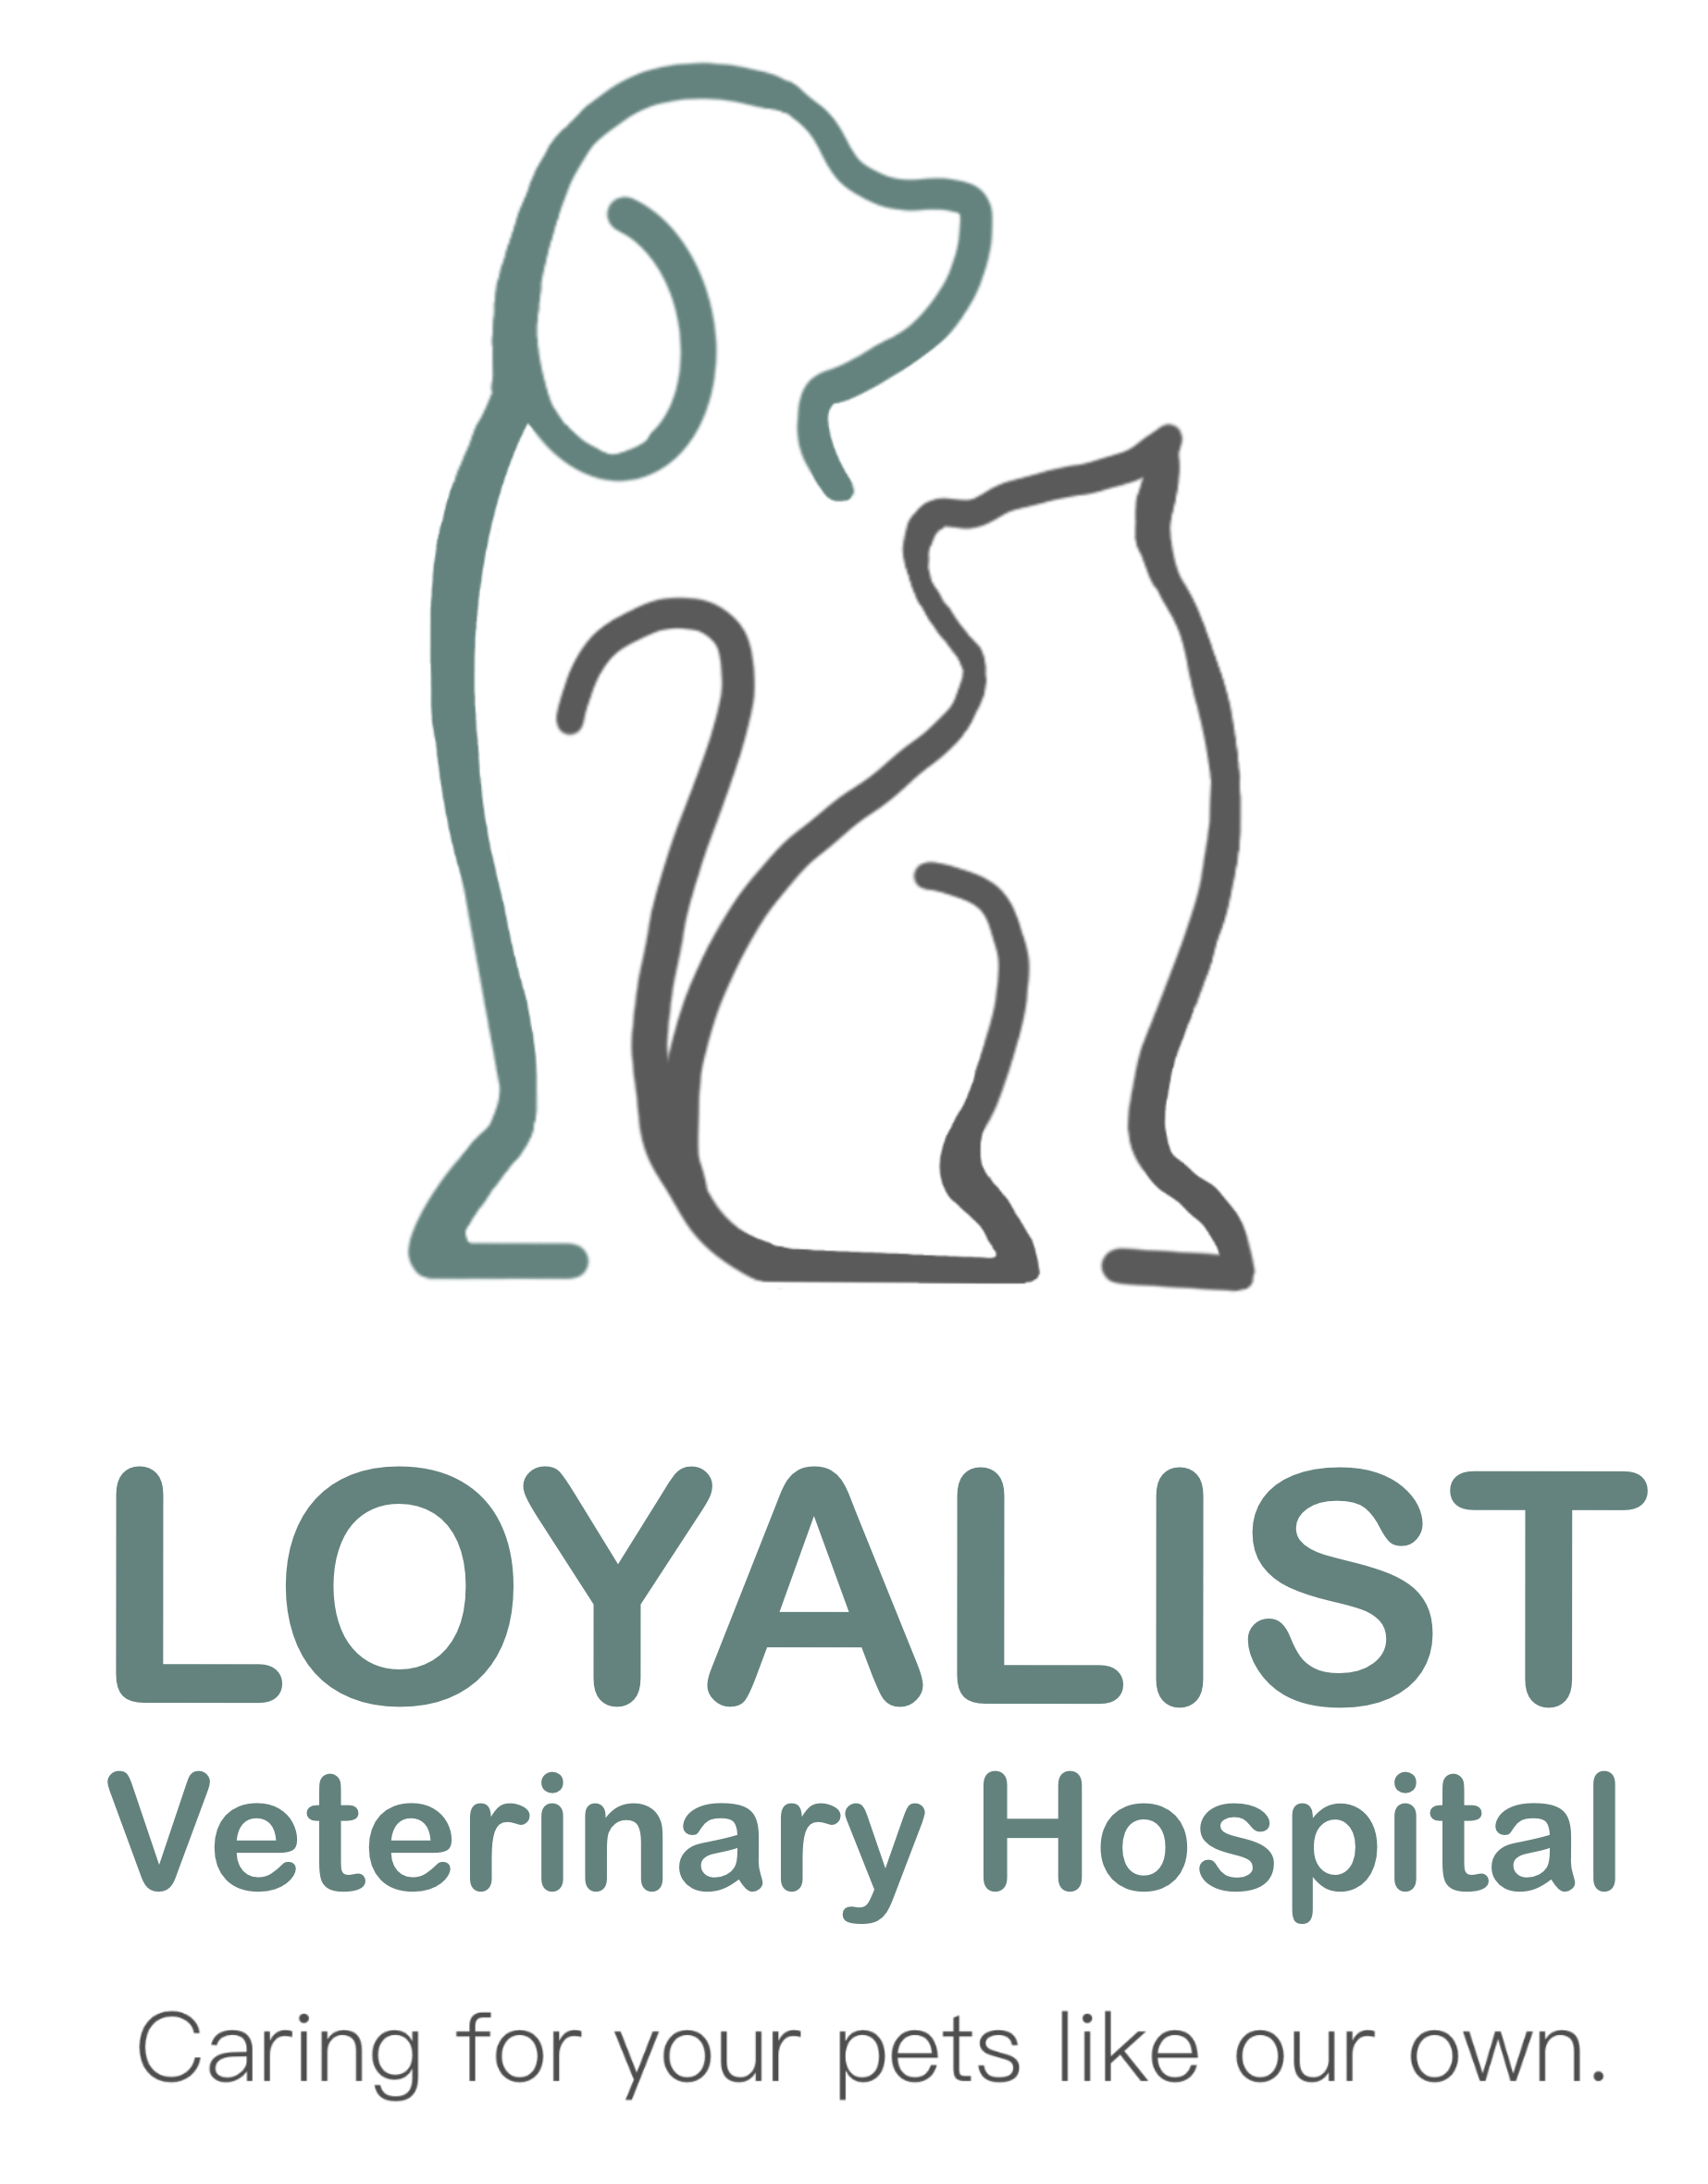 Loyalist Veterinary Hospital